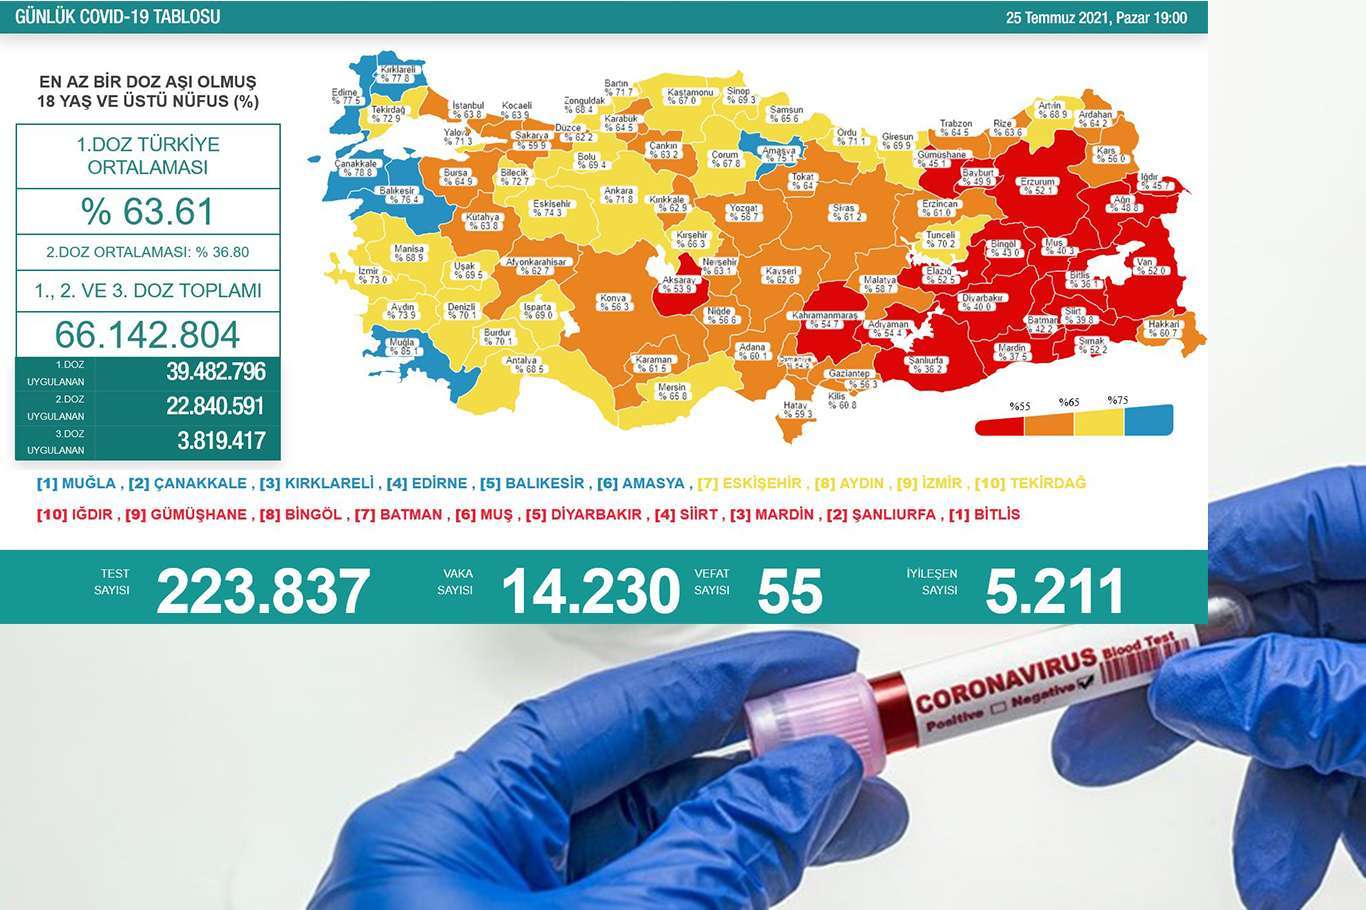 Turkey reports 14,230 new coronavirus cases, 55 deaths